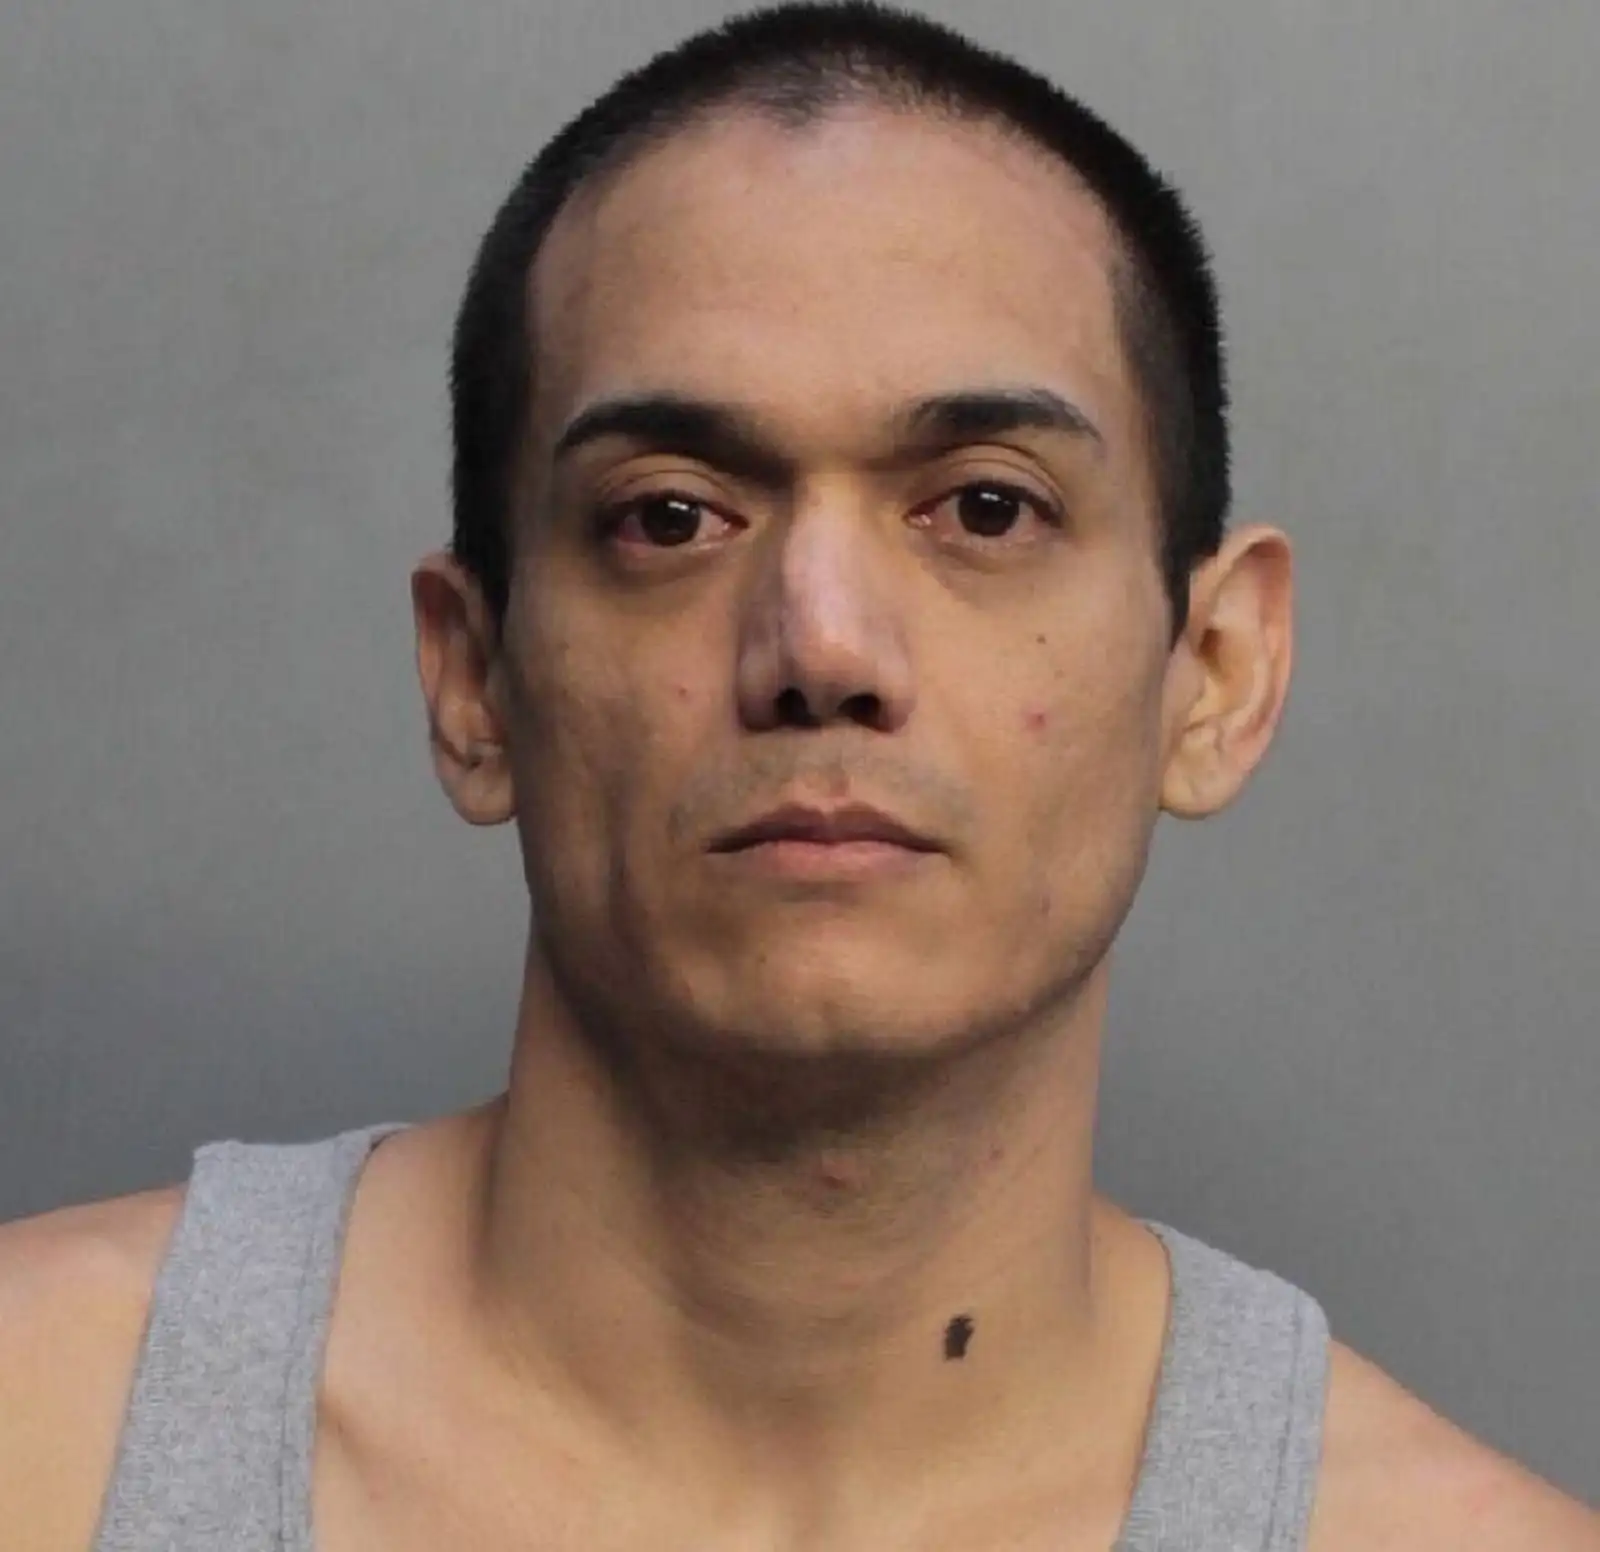 Florida man who tricked 80 men into gay sex sentenced to prison PinkNews